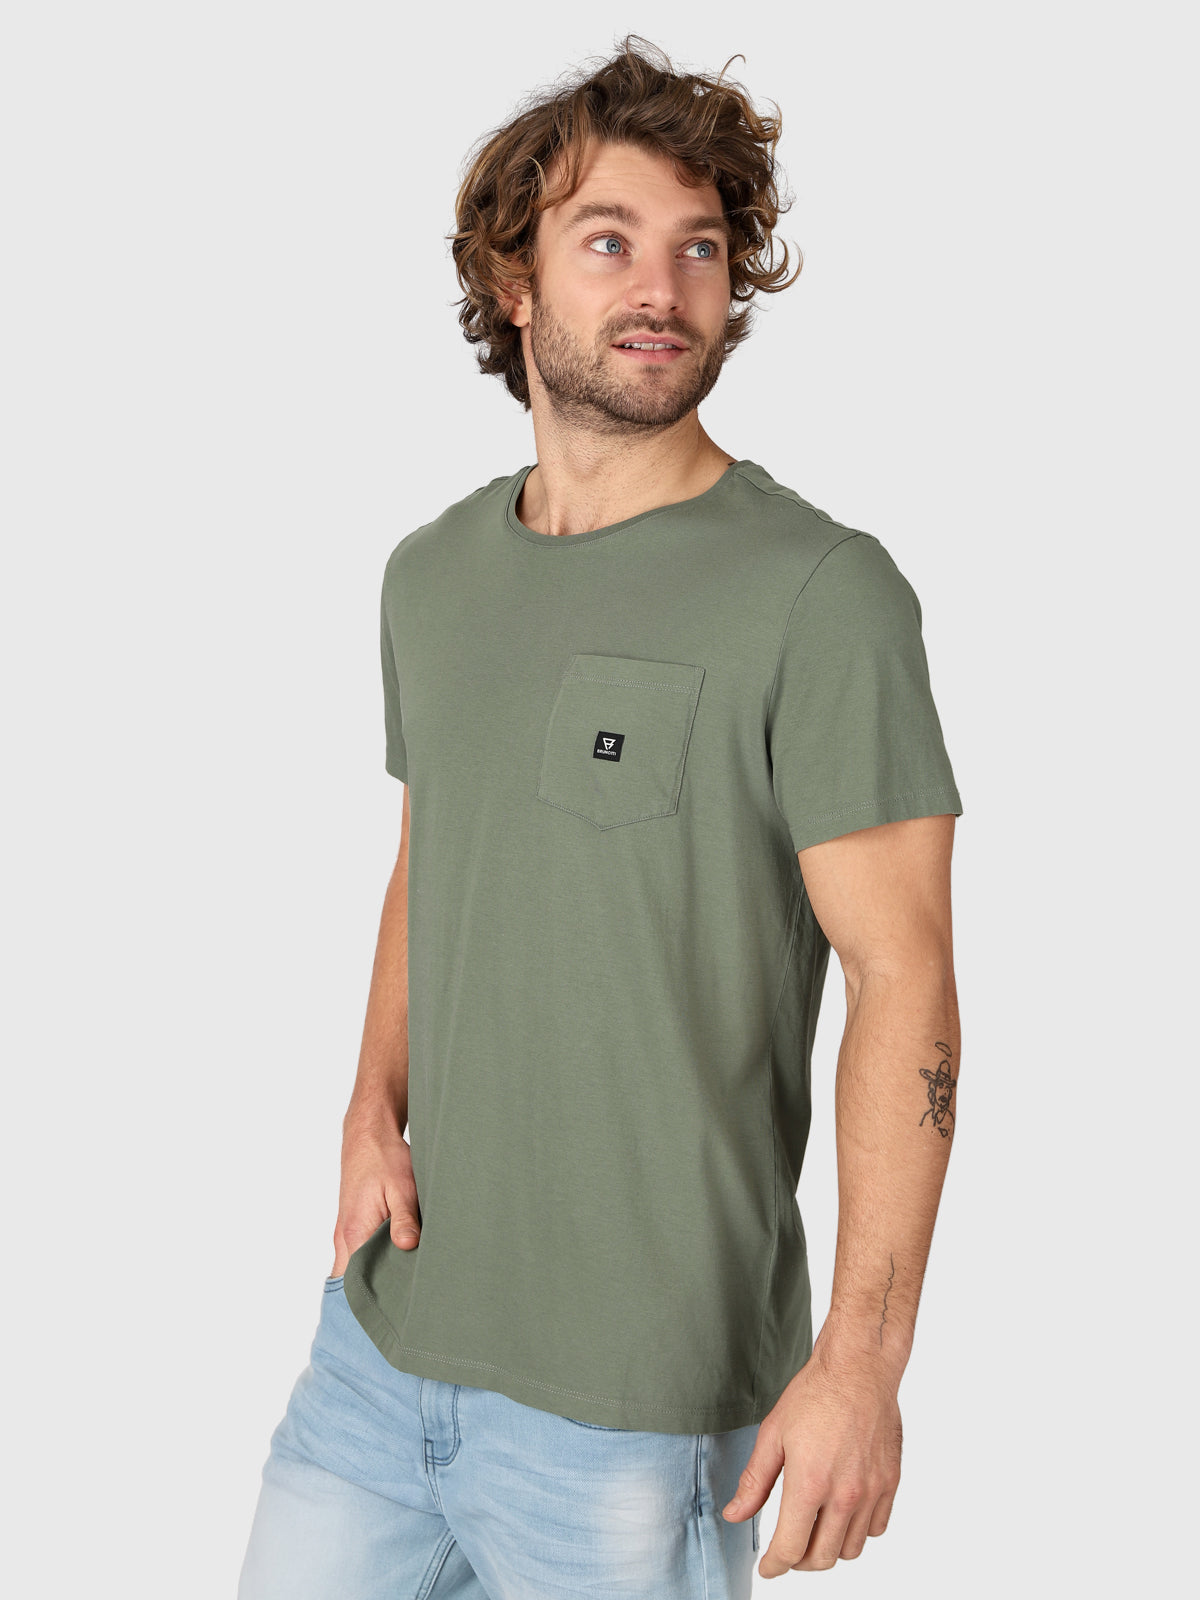 Axle-N Herren T-Shirt | Grün